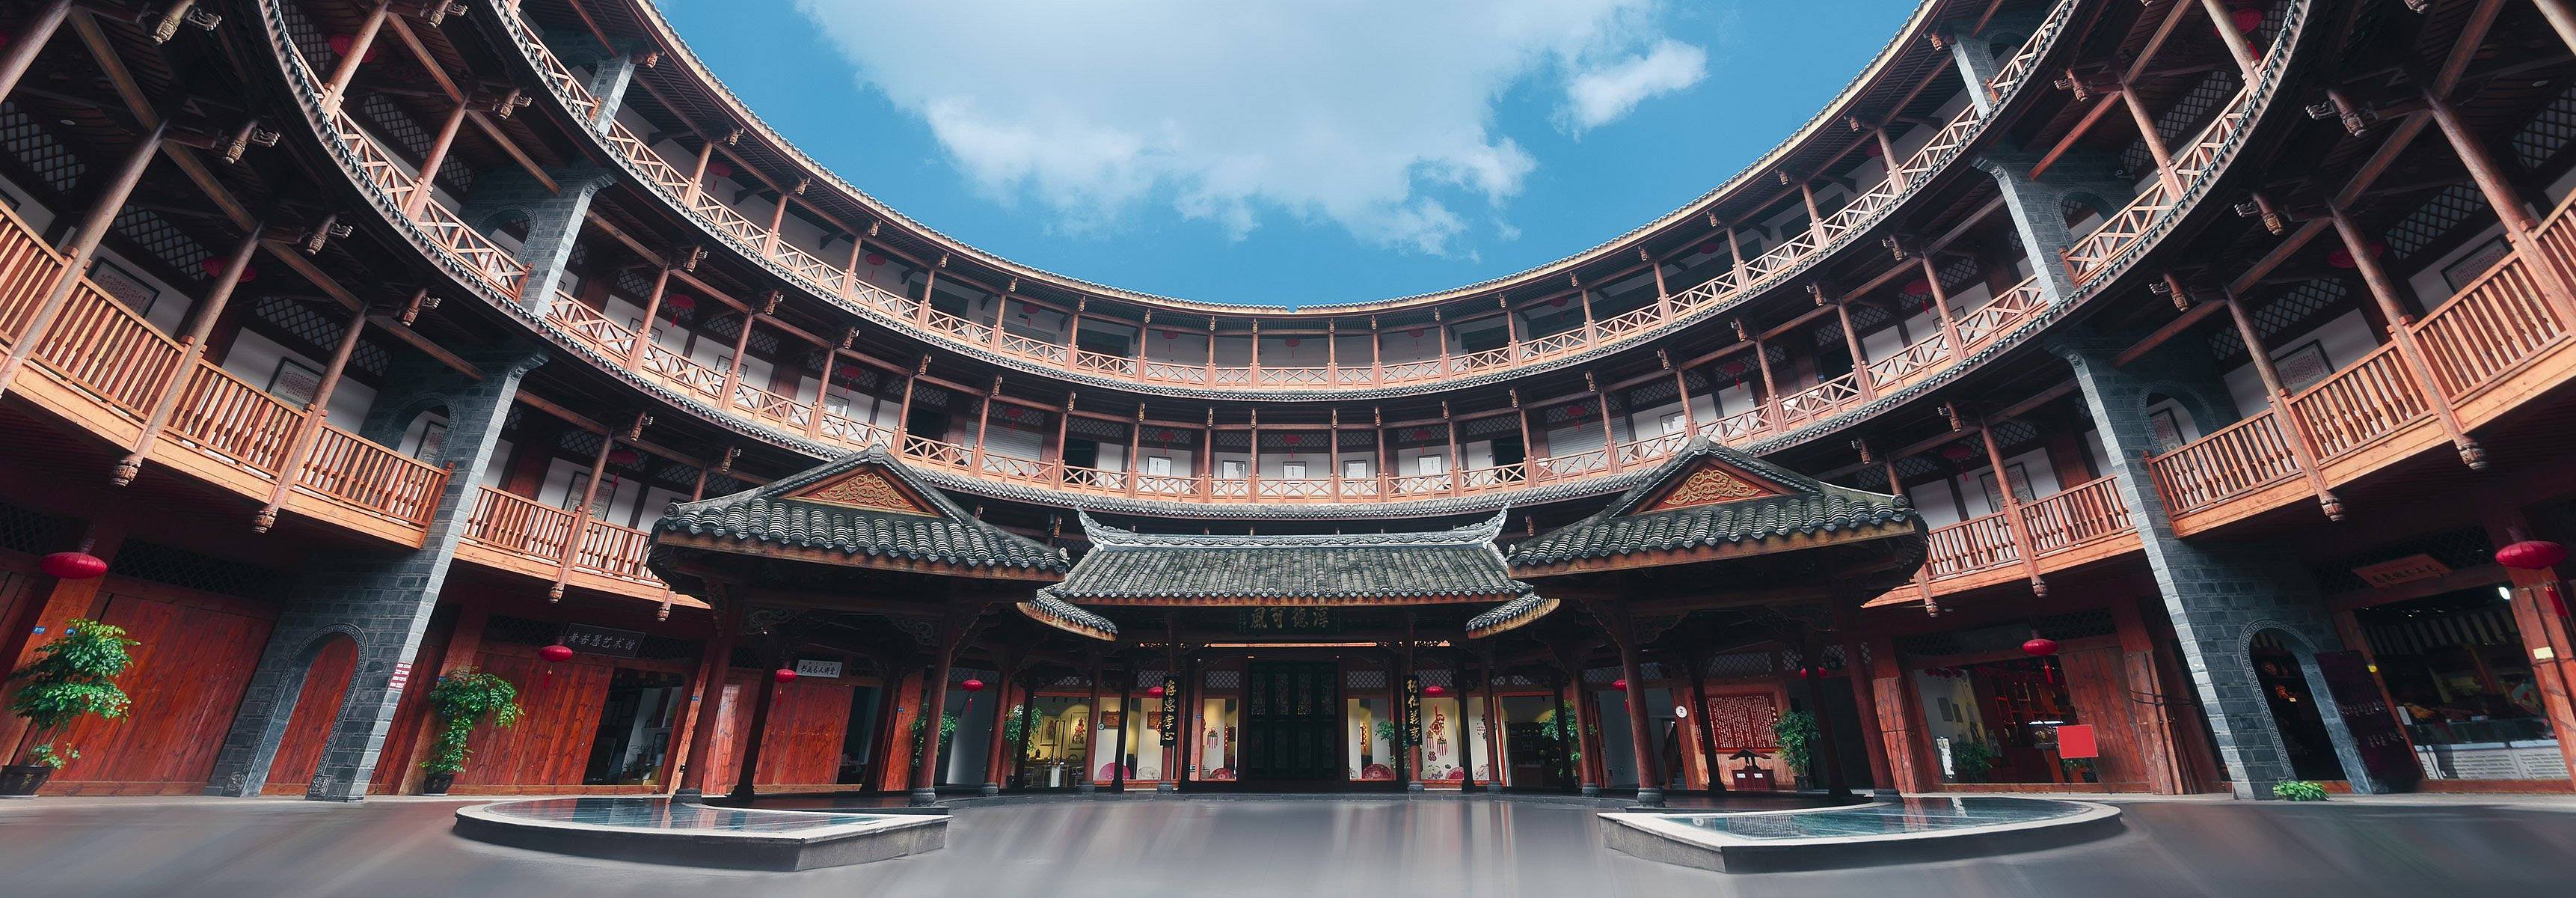 Luodai tulou (hakka roundhouse) in Chengdu,Sichuan province,